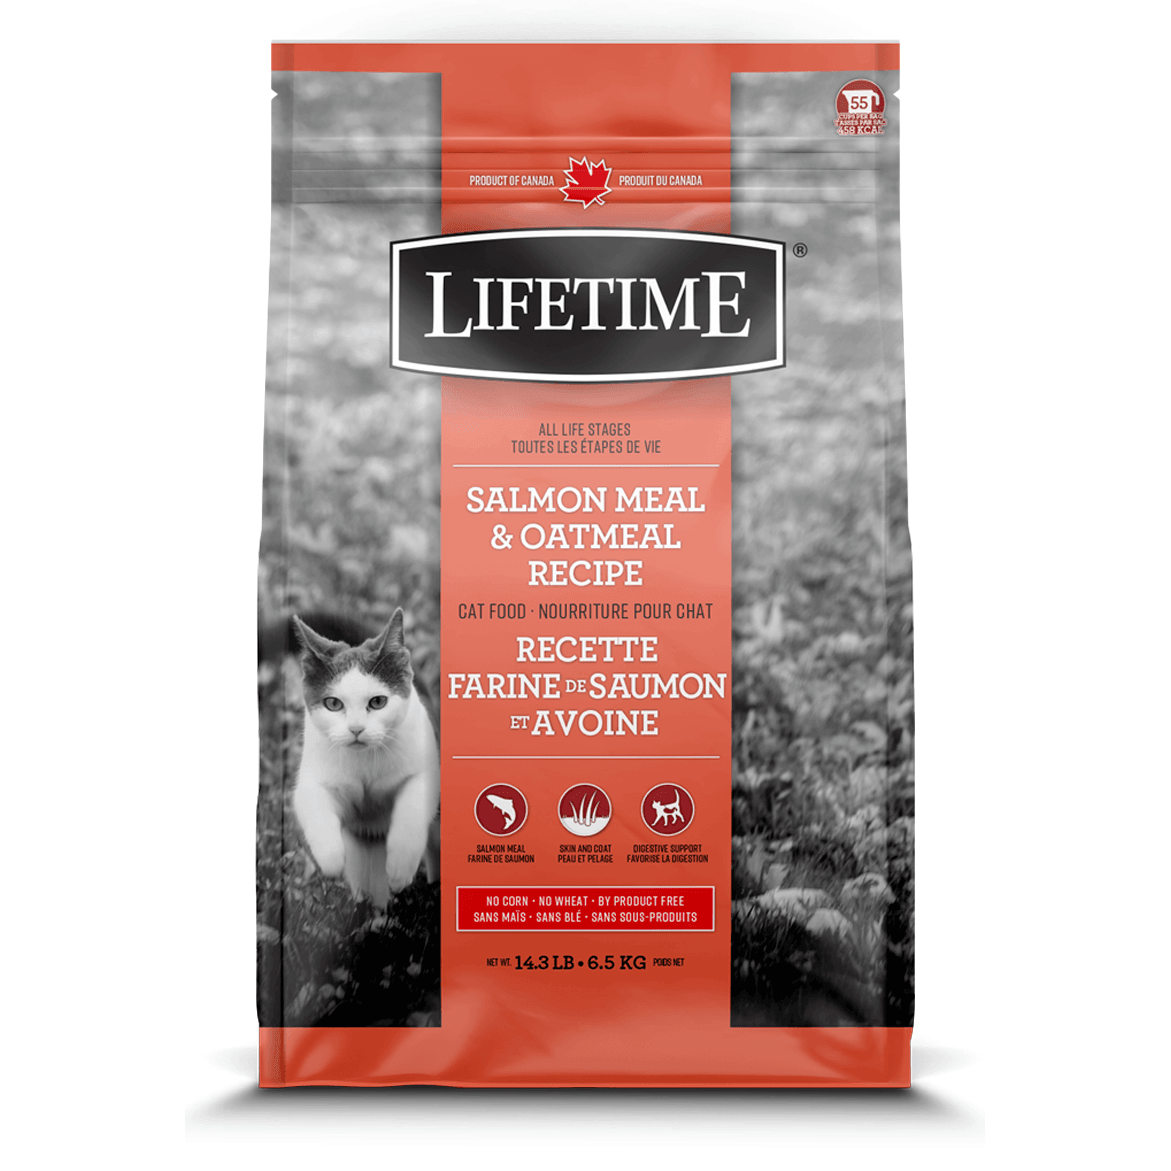 Lifetime Cat Food Salmon Meal & Oatmeal - 2.27 Kg - Cat Food - Lifetime - PetMax Canada